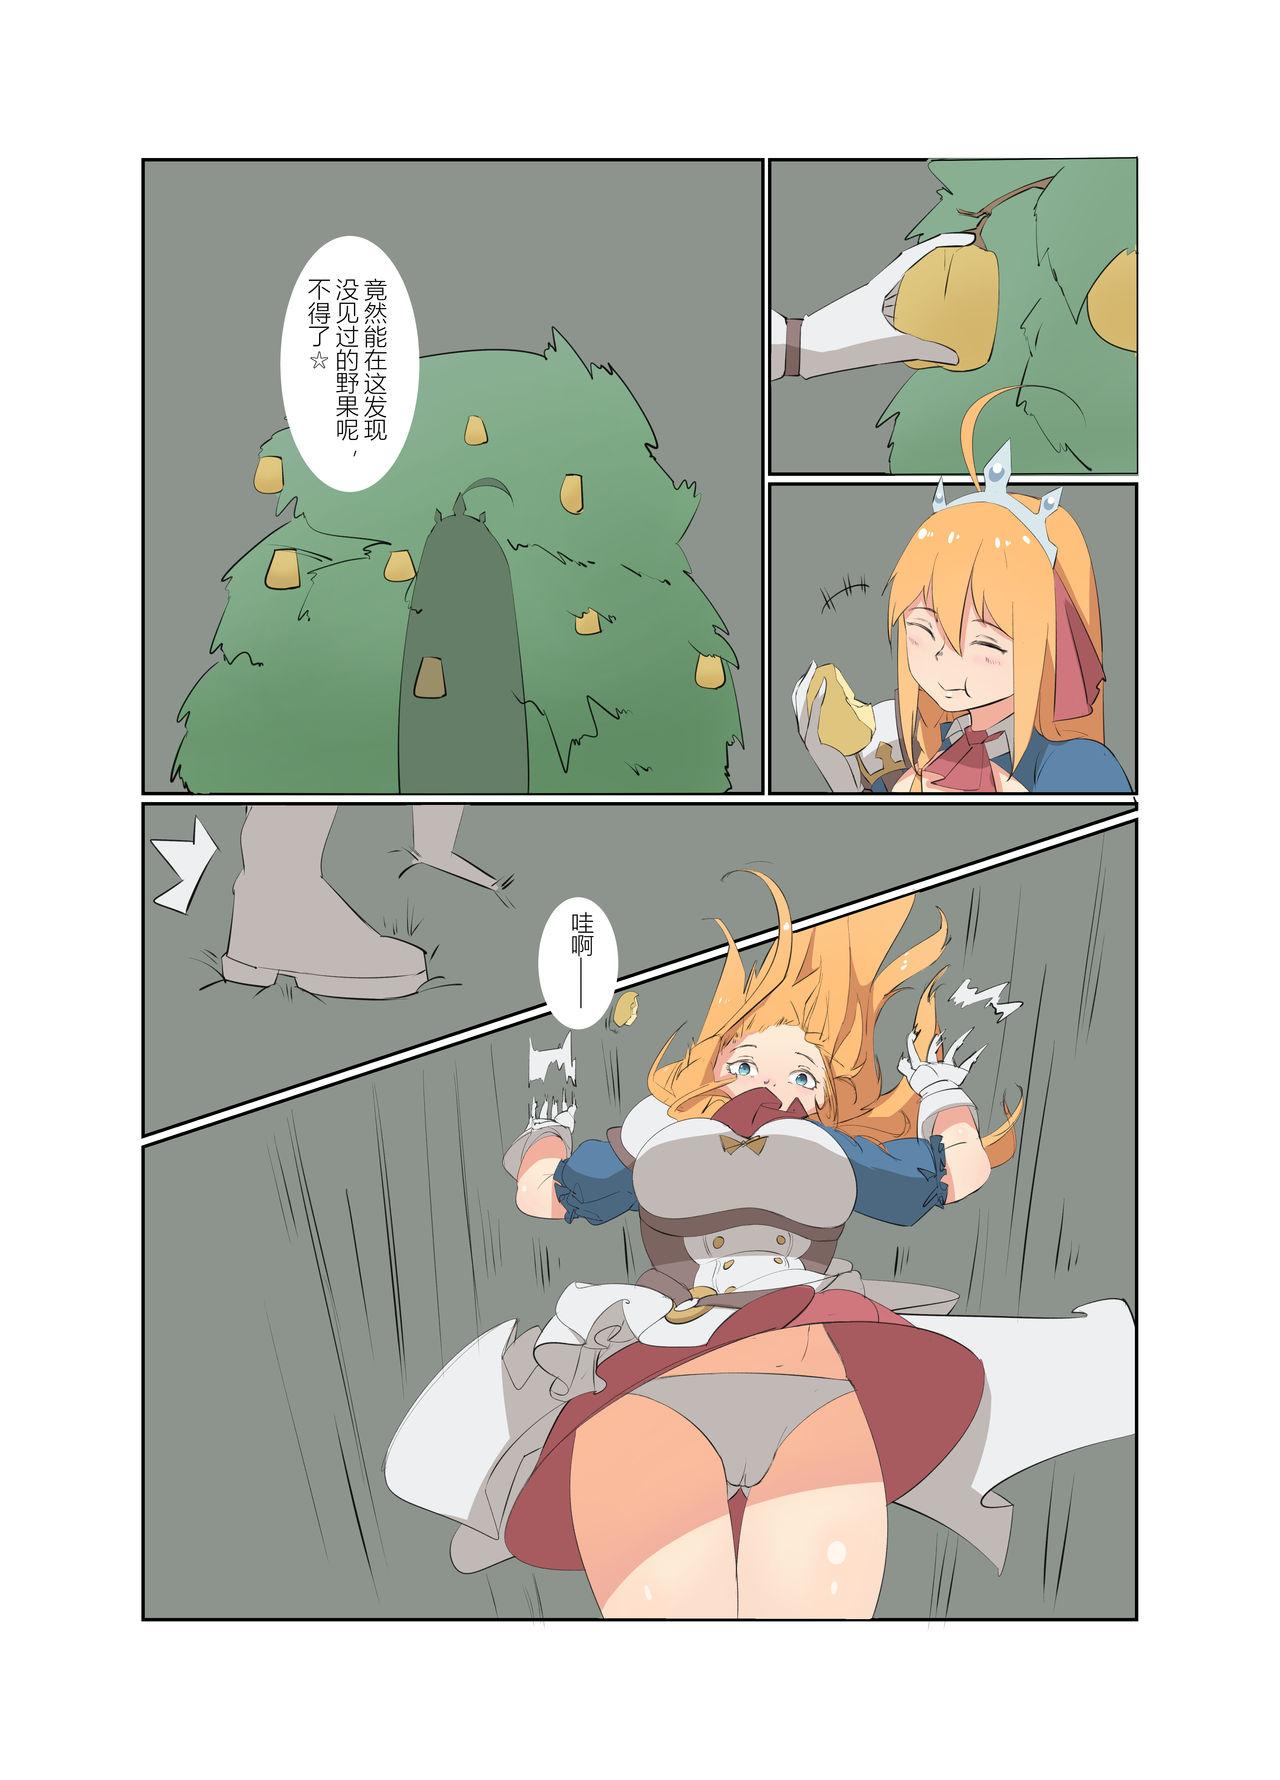 Threesome 密林的礼物 - Princess connect Bubblebutt - Page 4